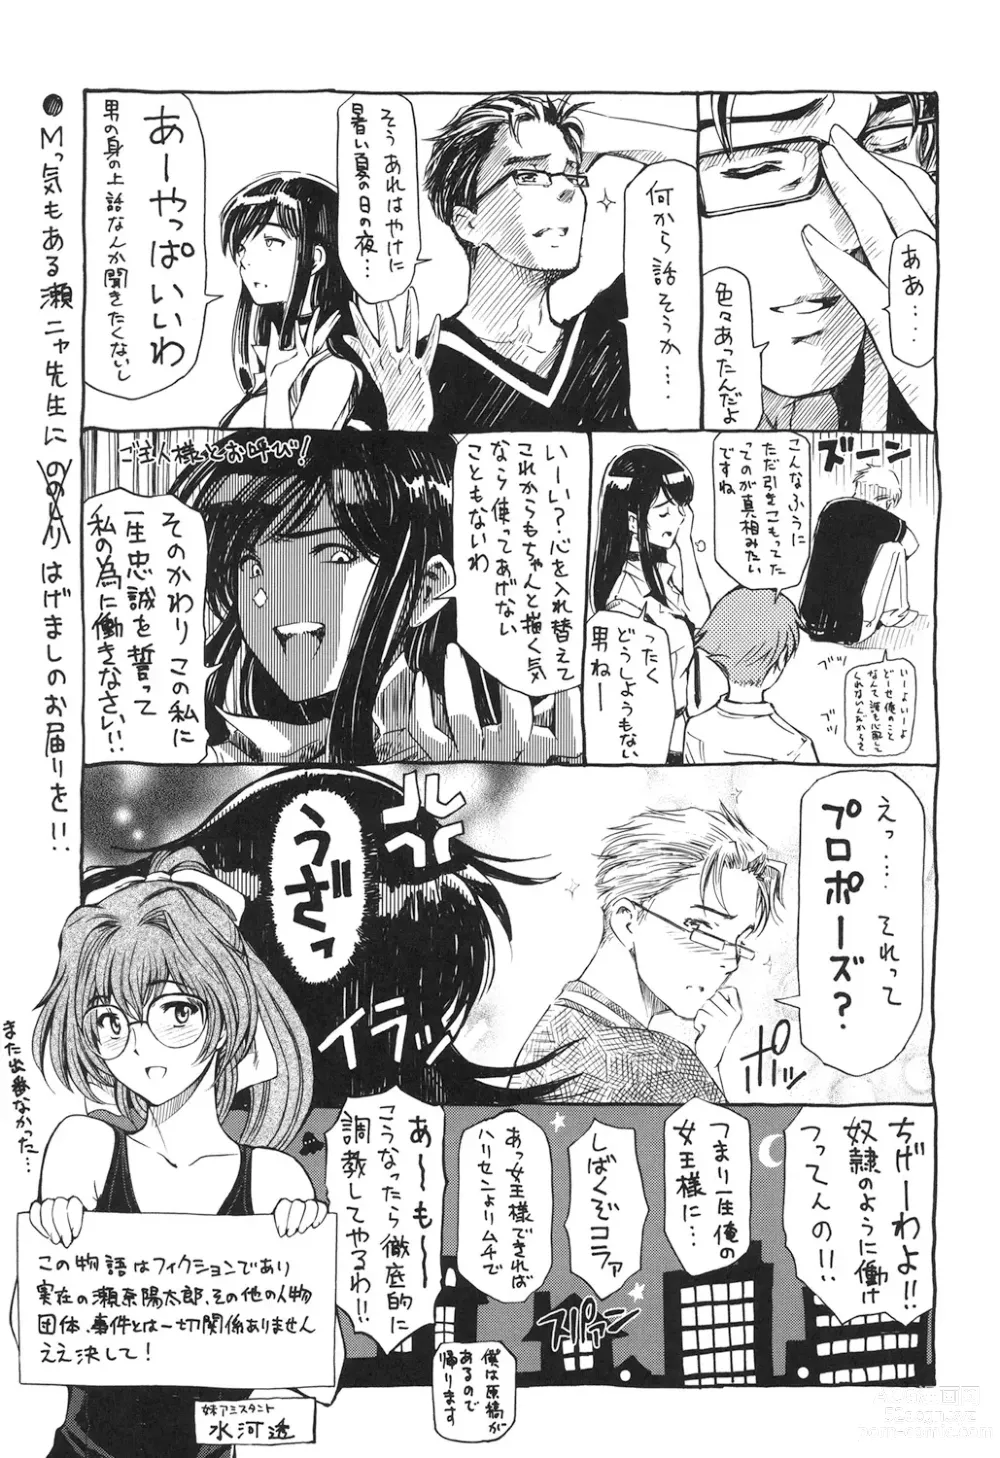 Page 253 of manga Kannou no Houteishiki